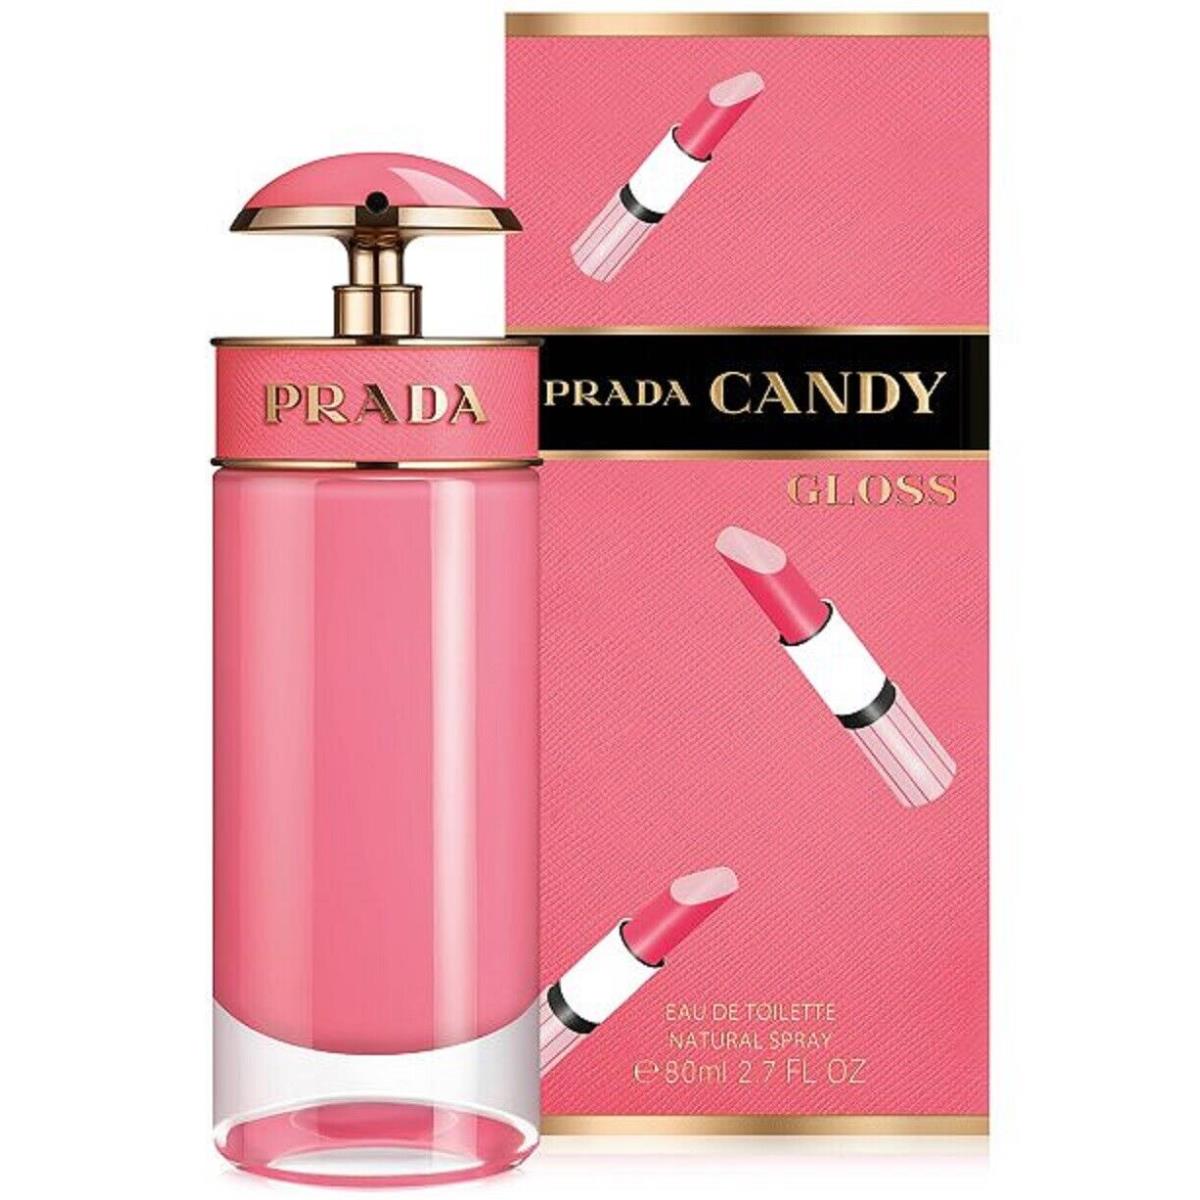 Prada Candy Gloss 2.7 oz / 80 ml Eau de Toilette Edt Women Perfume Spray